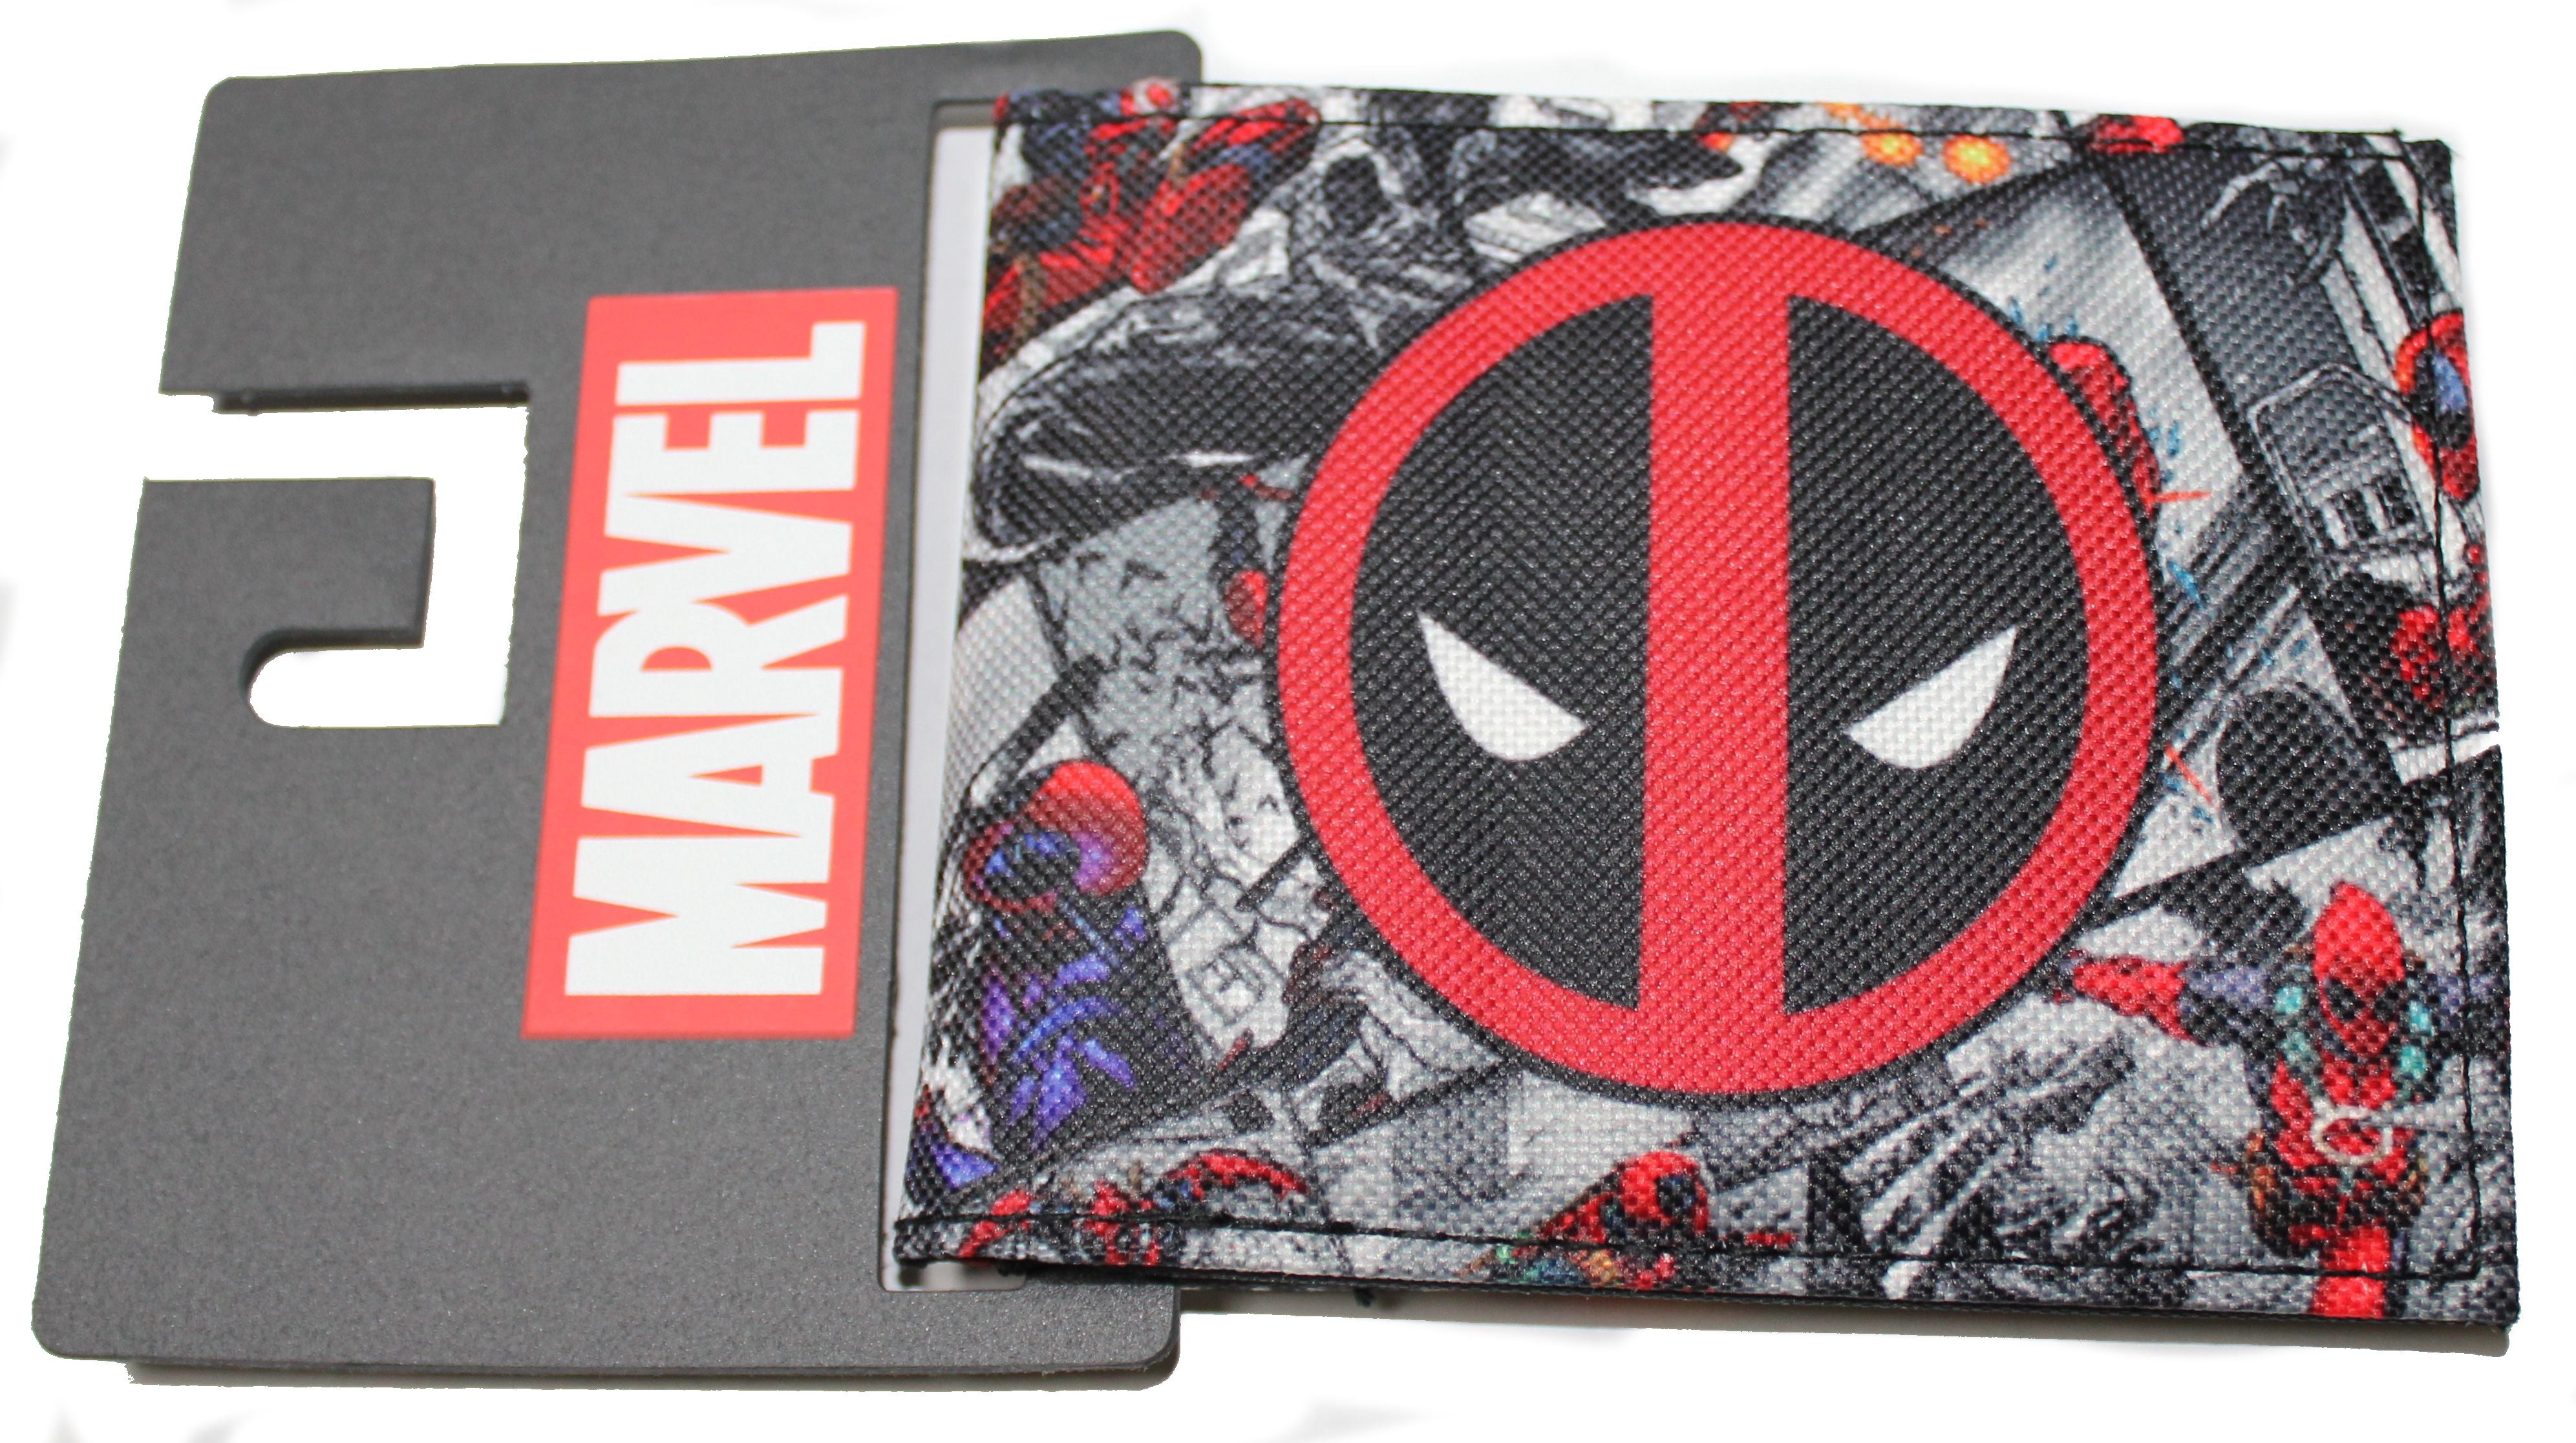 Marvel Comics Deadpool Bi-Fold Wallet (Design 4)